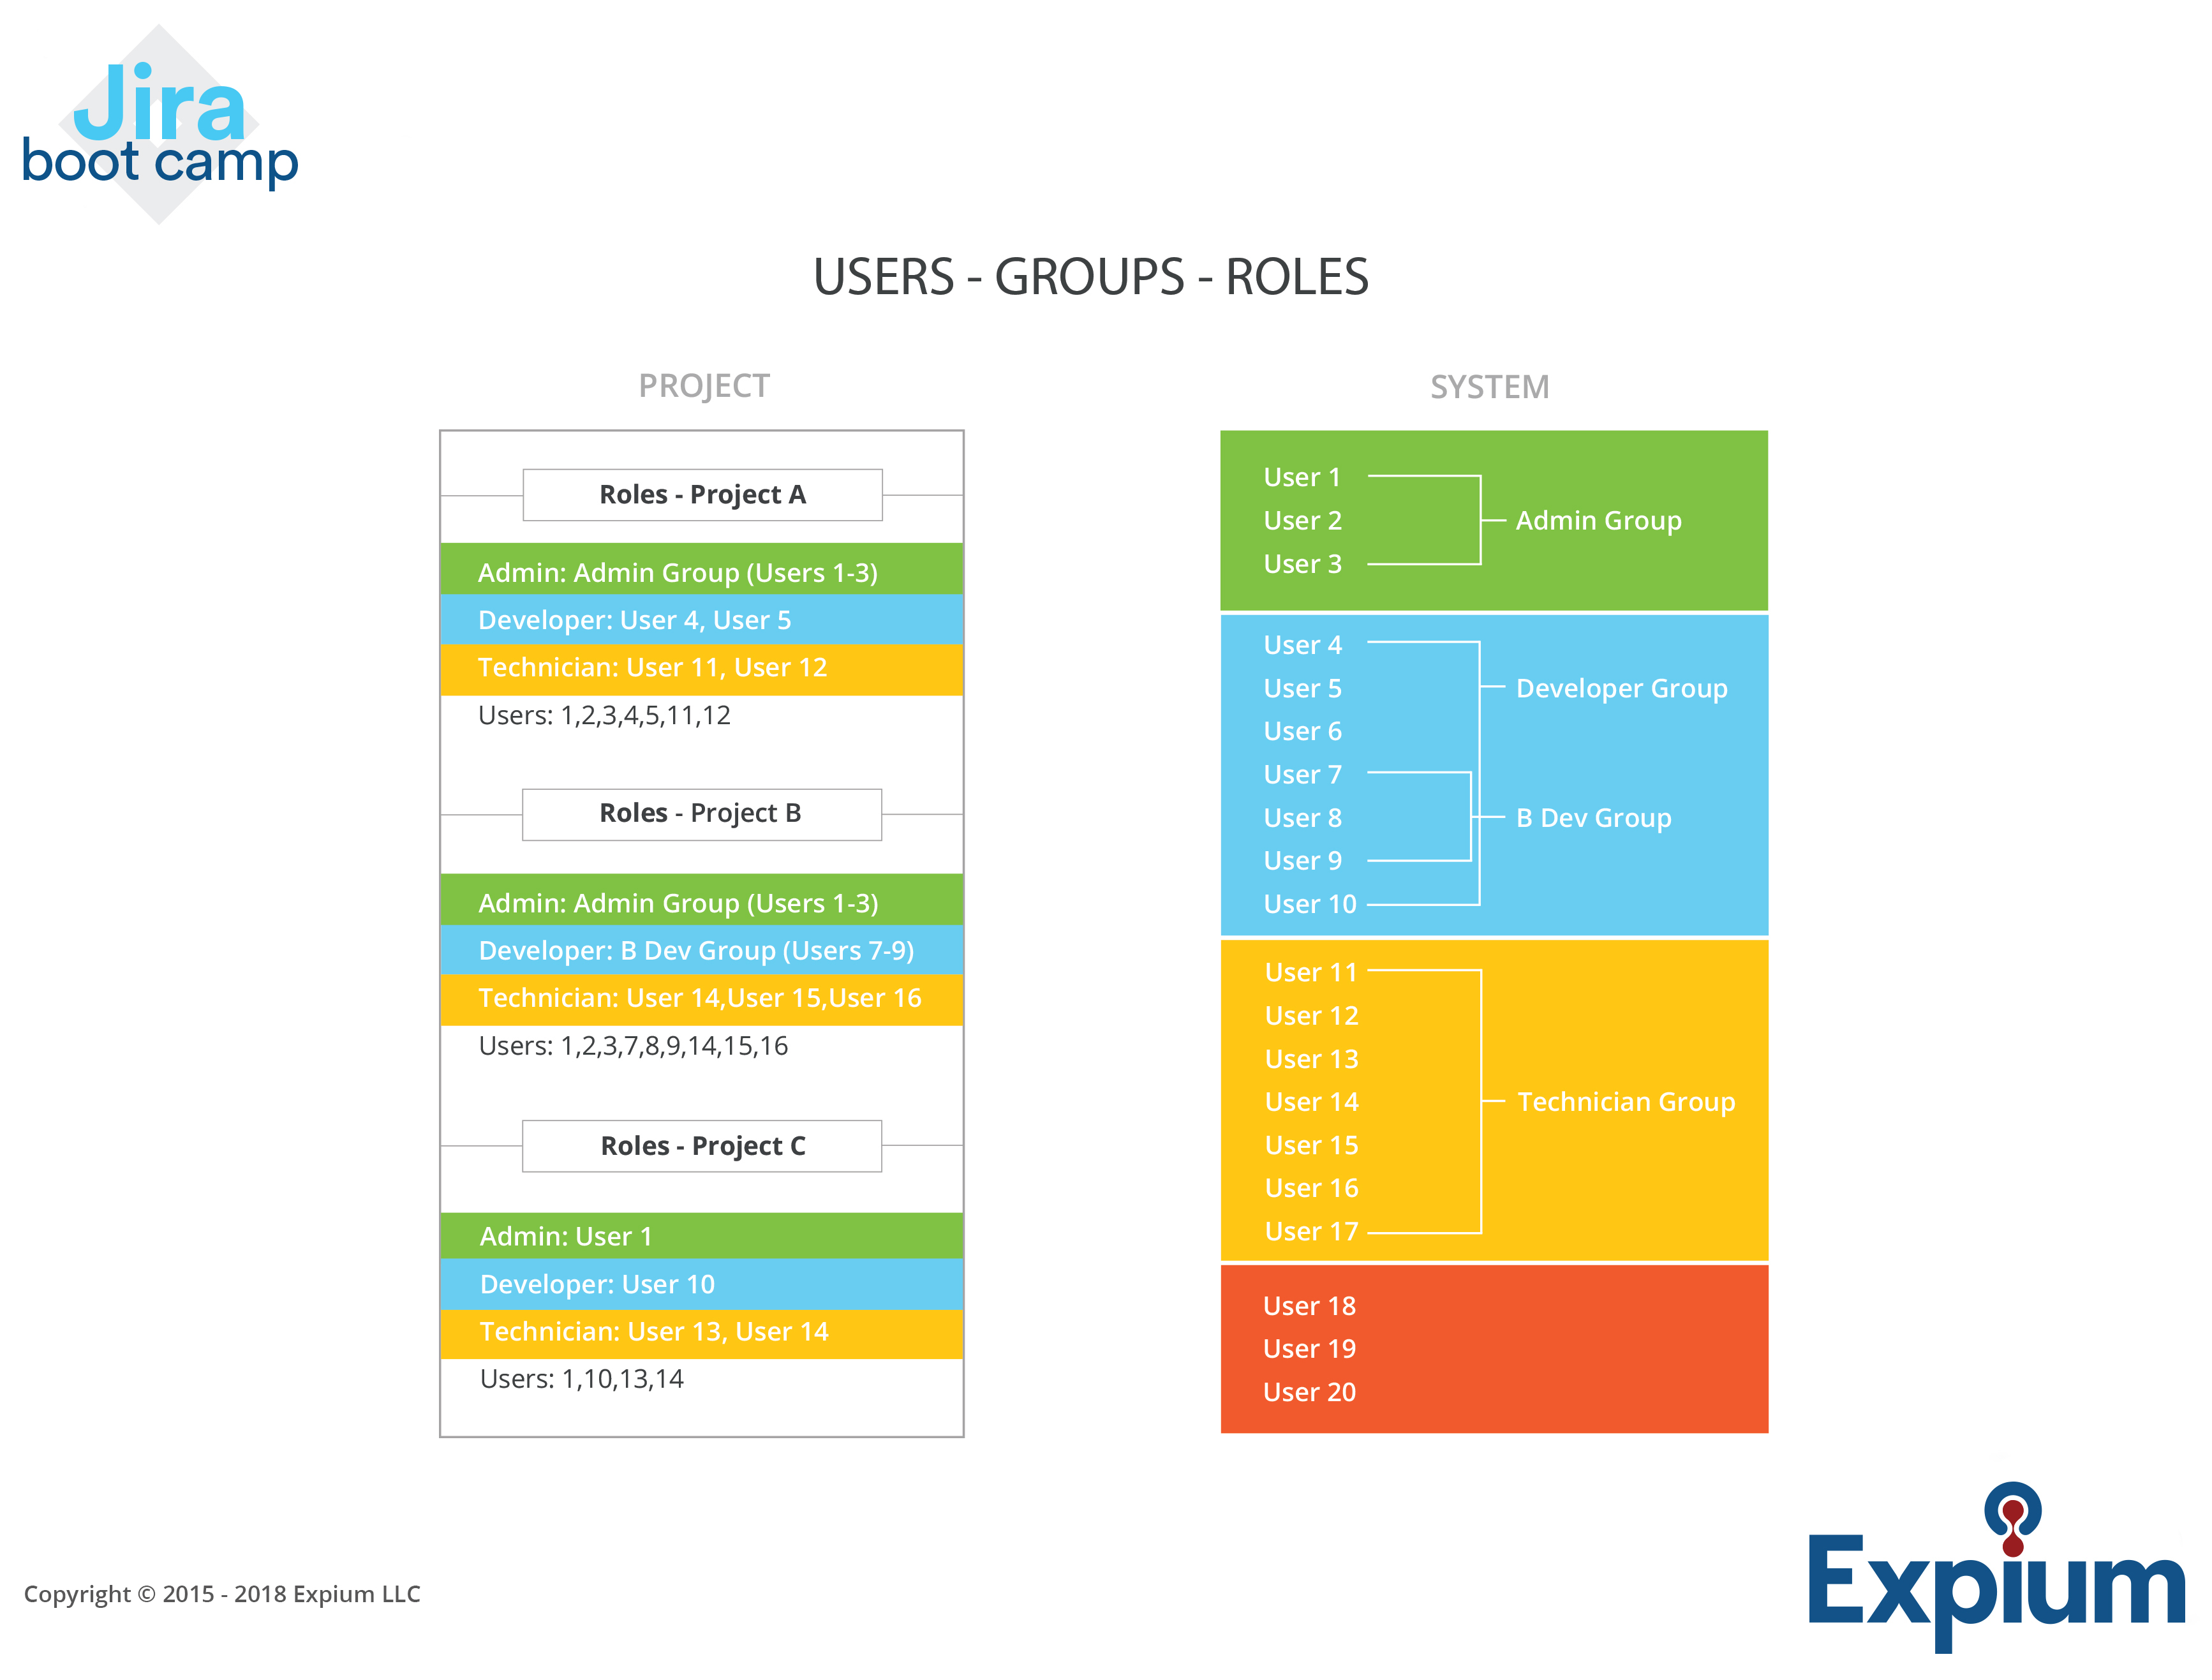 jira-users-groups-roles-expium-1